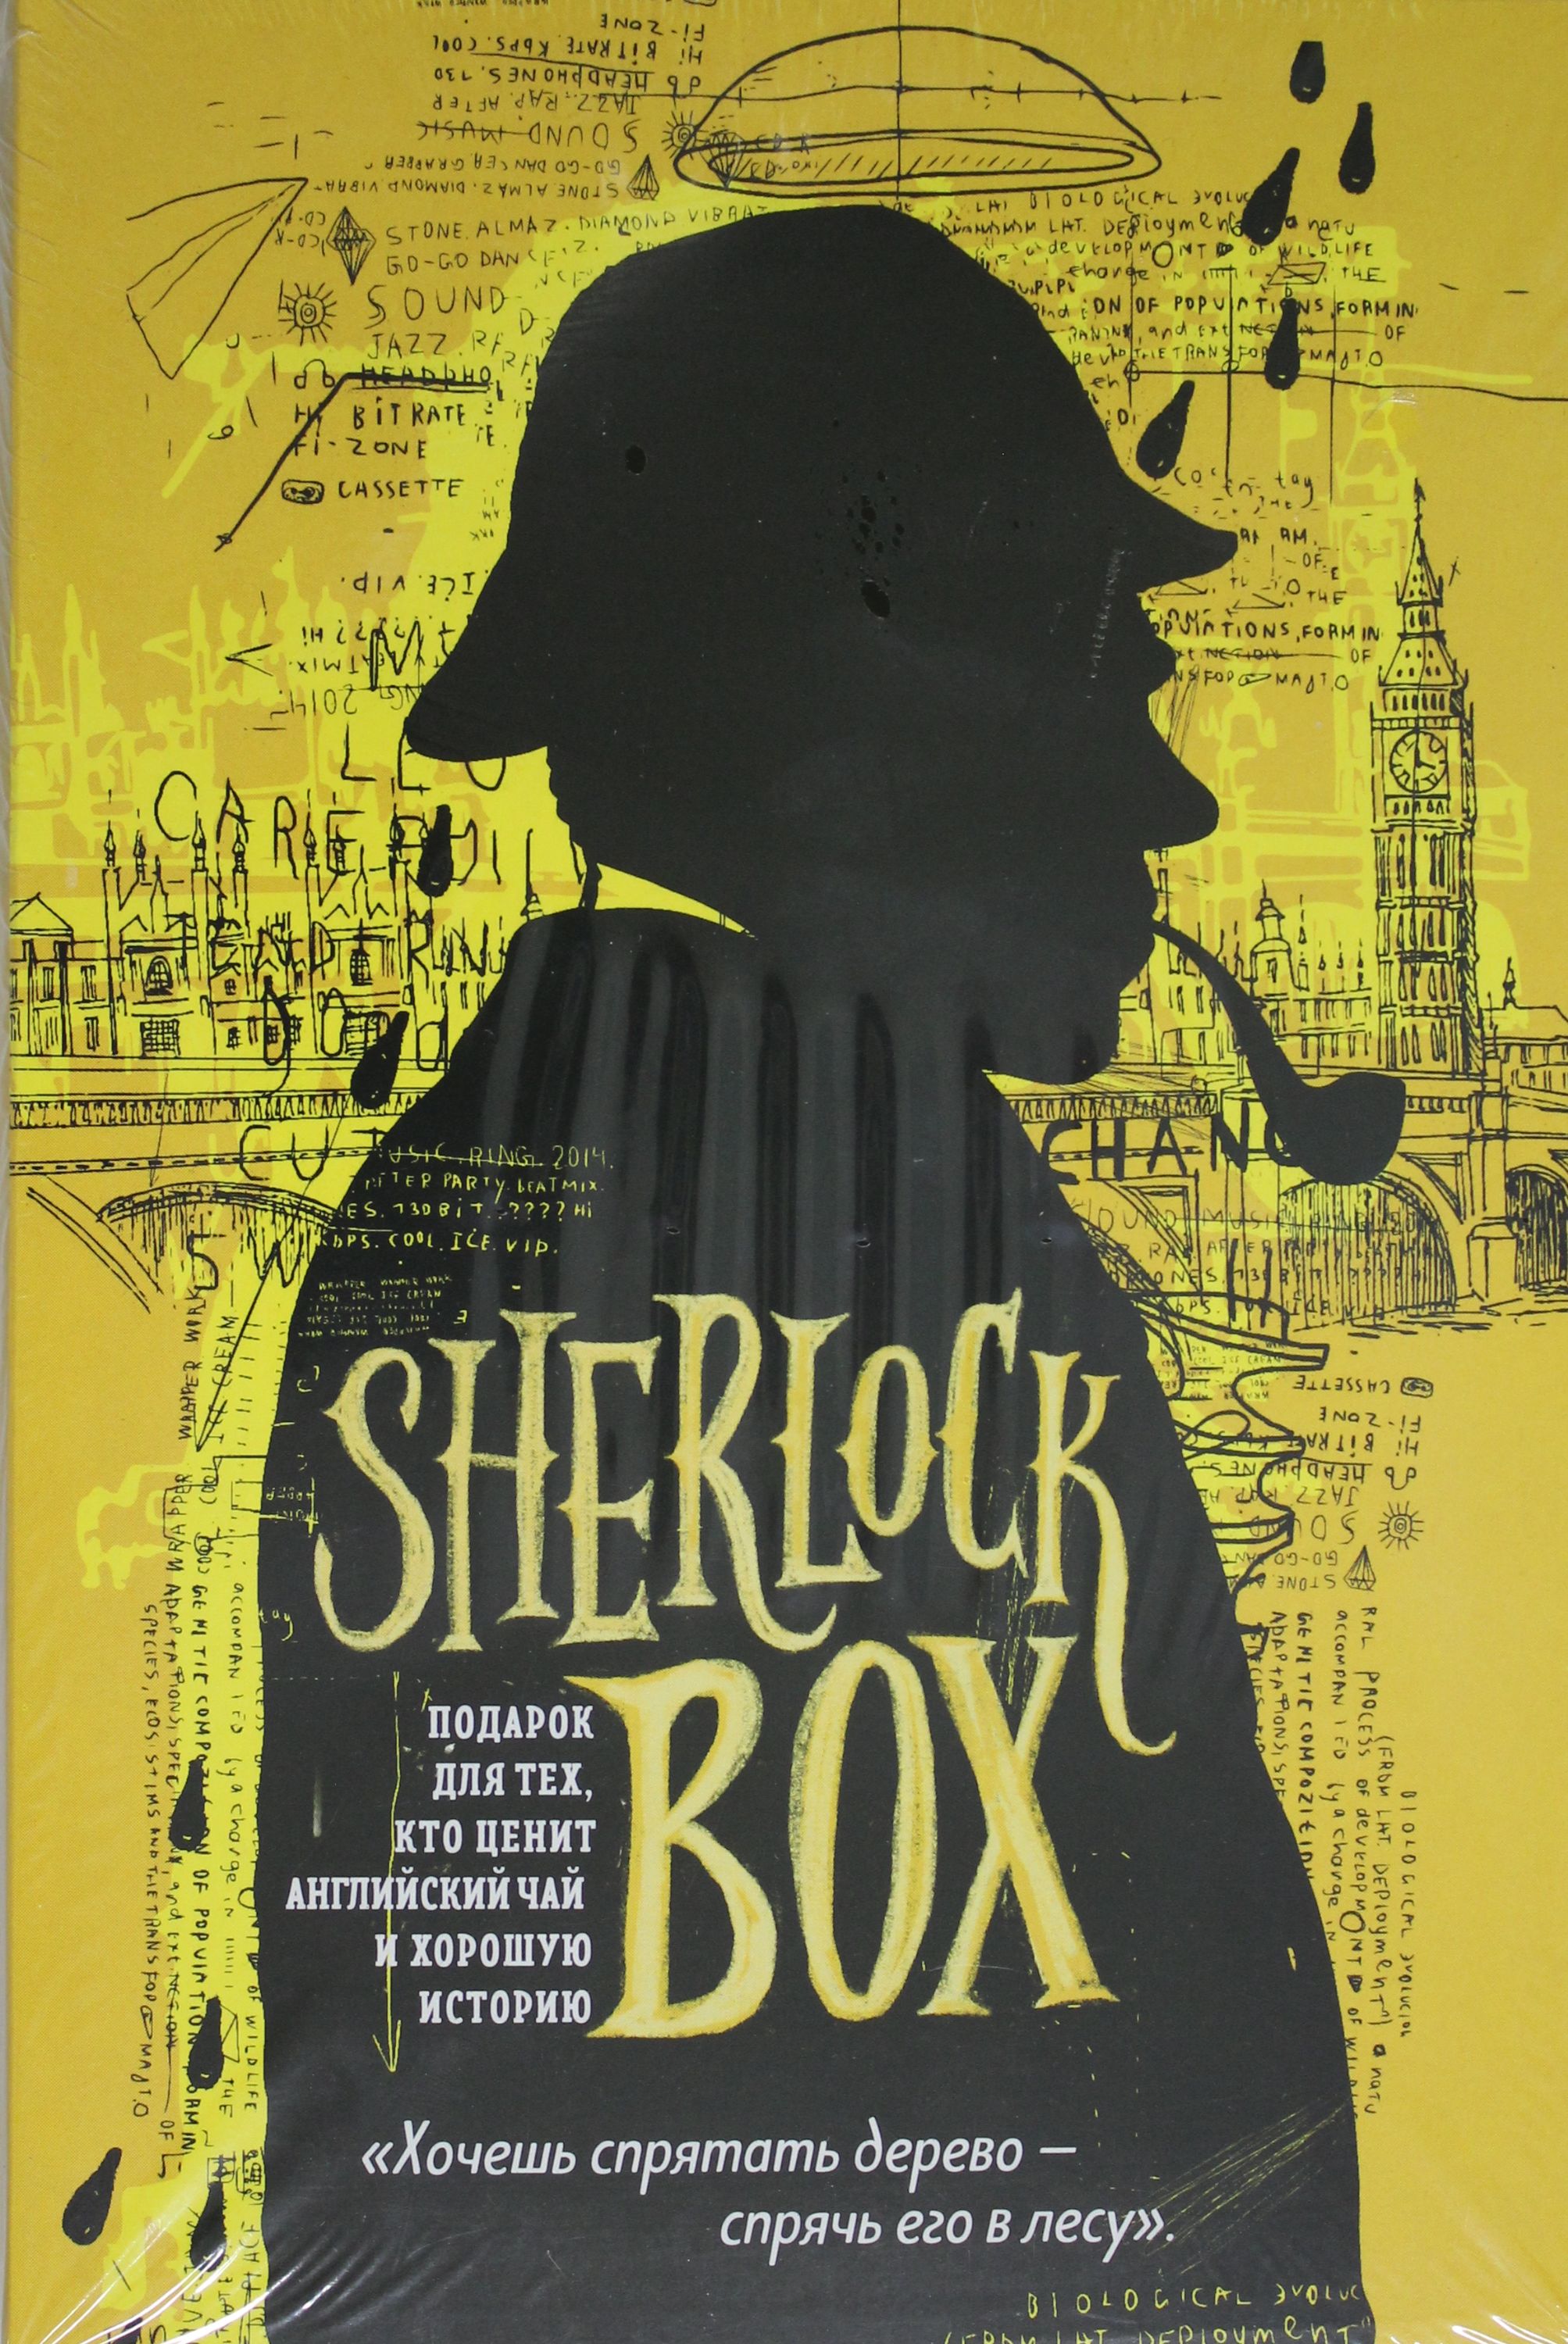 Sherlock BOX. A gift for those who appreciate English tea and good history